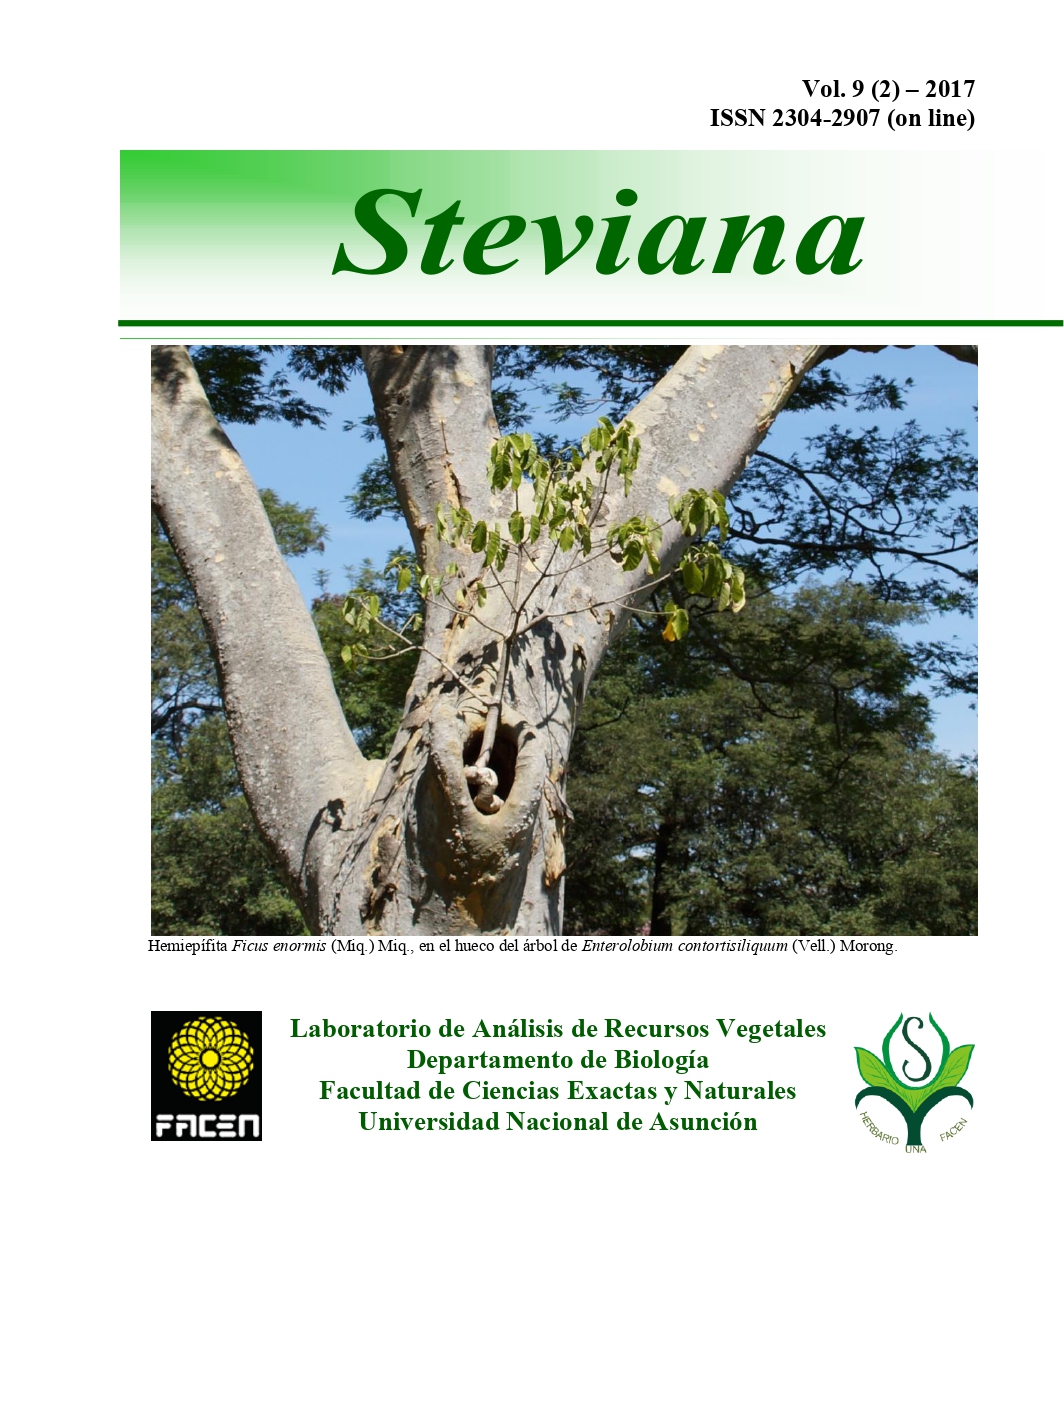 					Ver Vol. 9 Núm. 2 (2017): Steviana
				